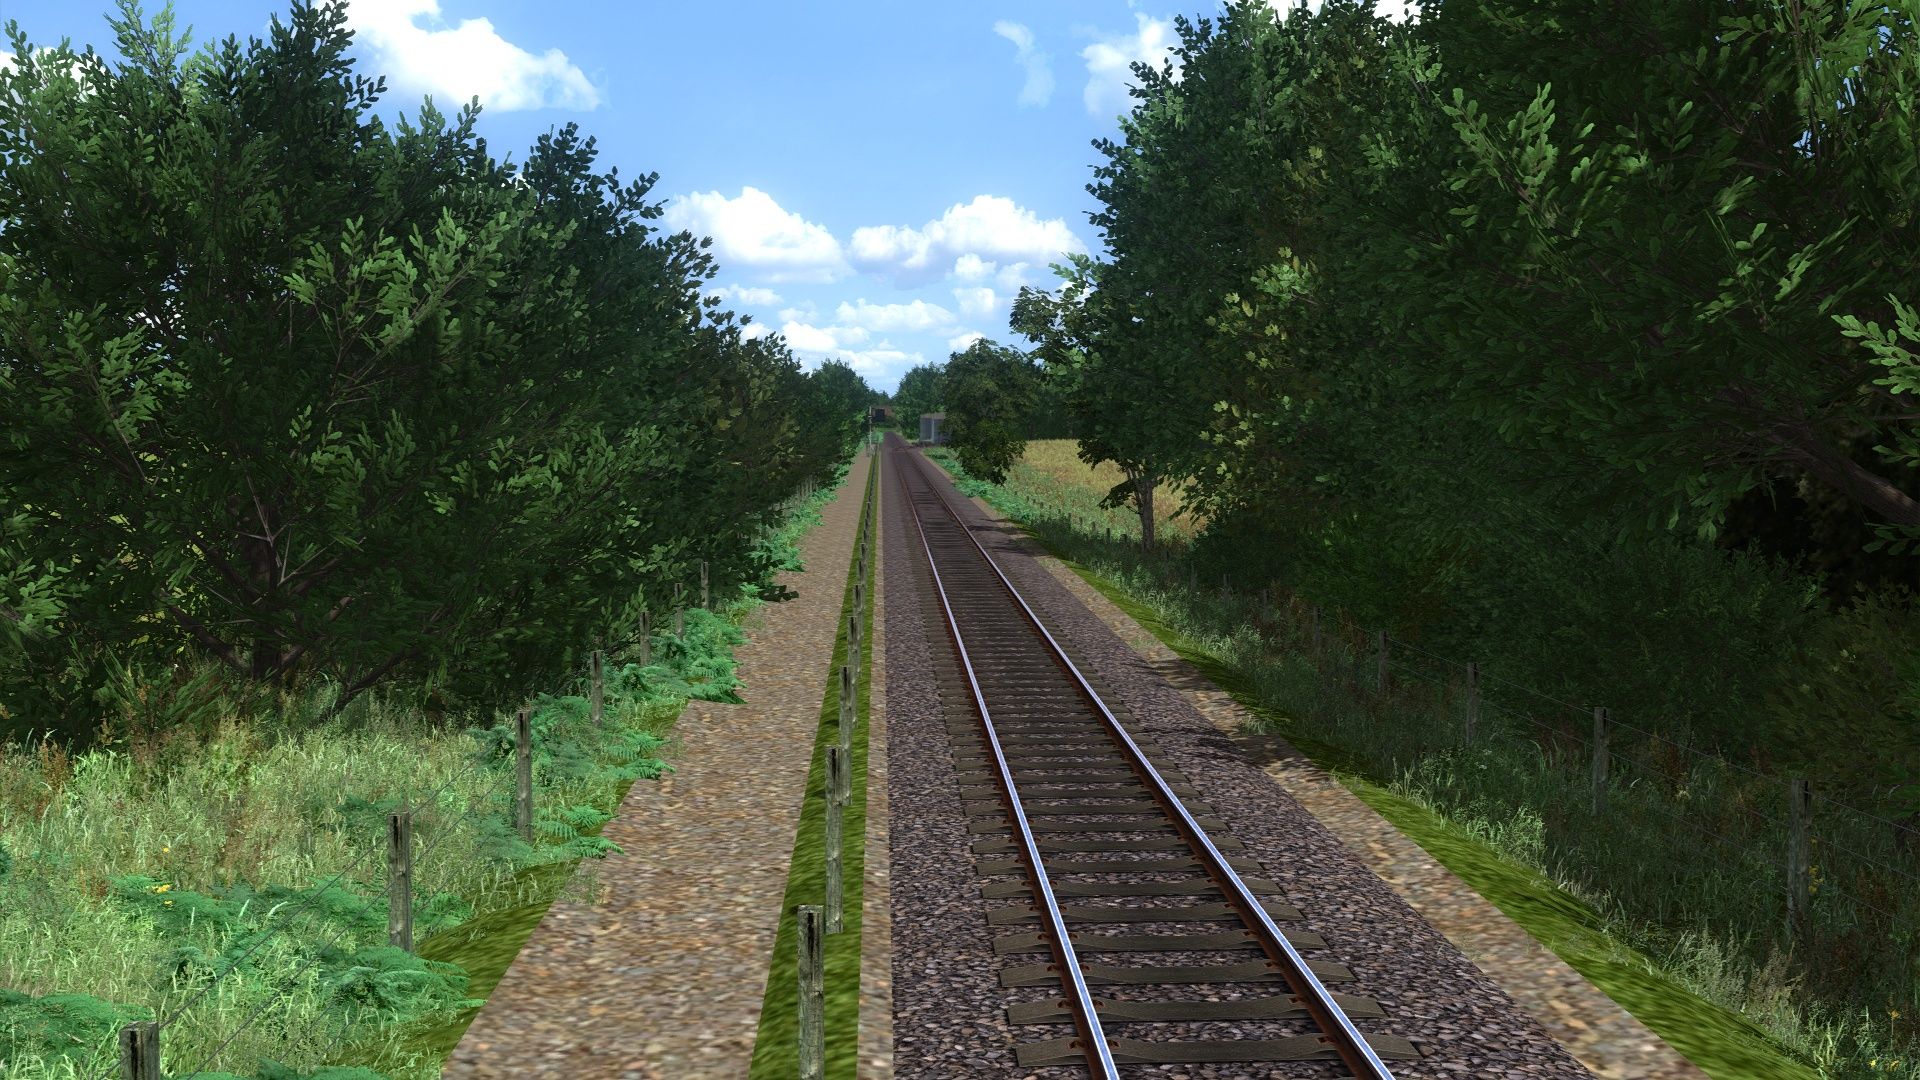 Screenshot_The North Norfolk  Railway - The Poppy Line_52.91715-1.11379_12-15-17.jpg